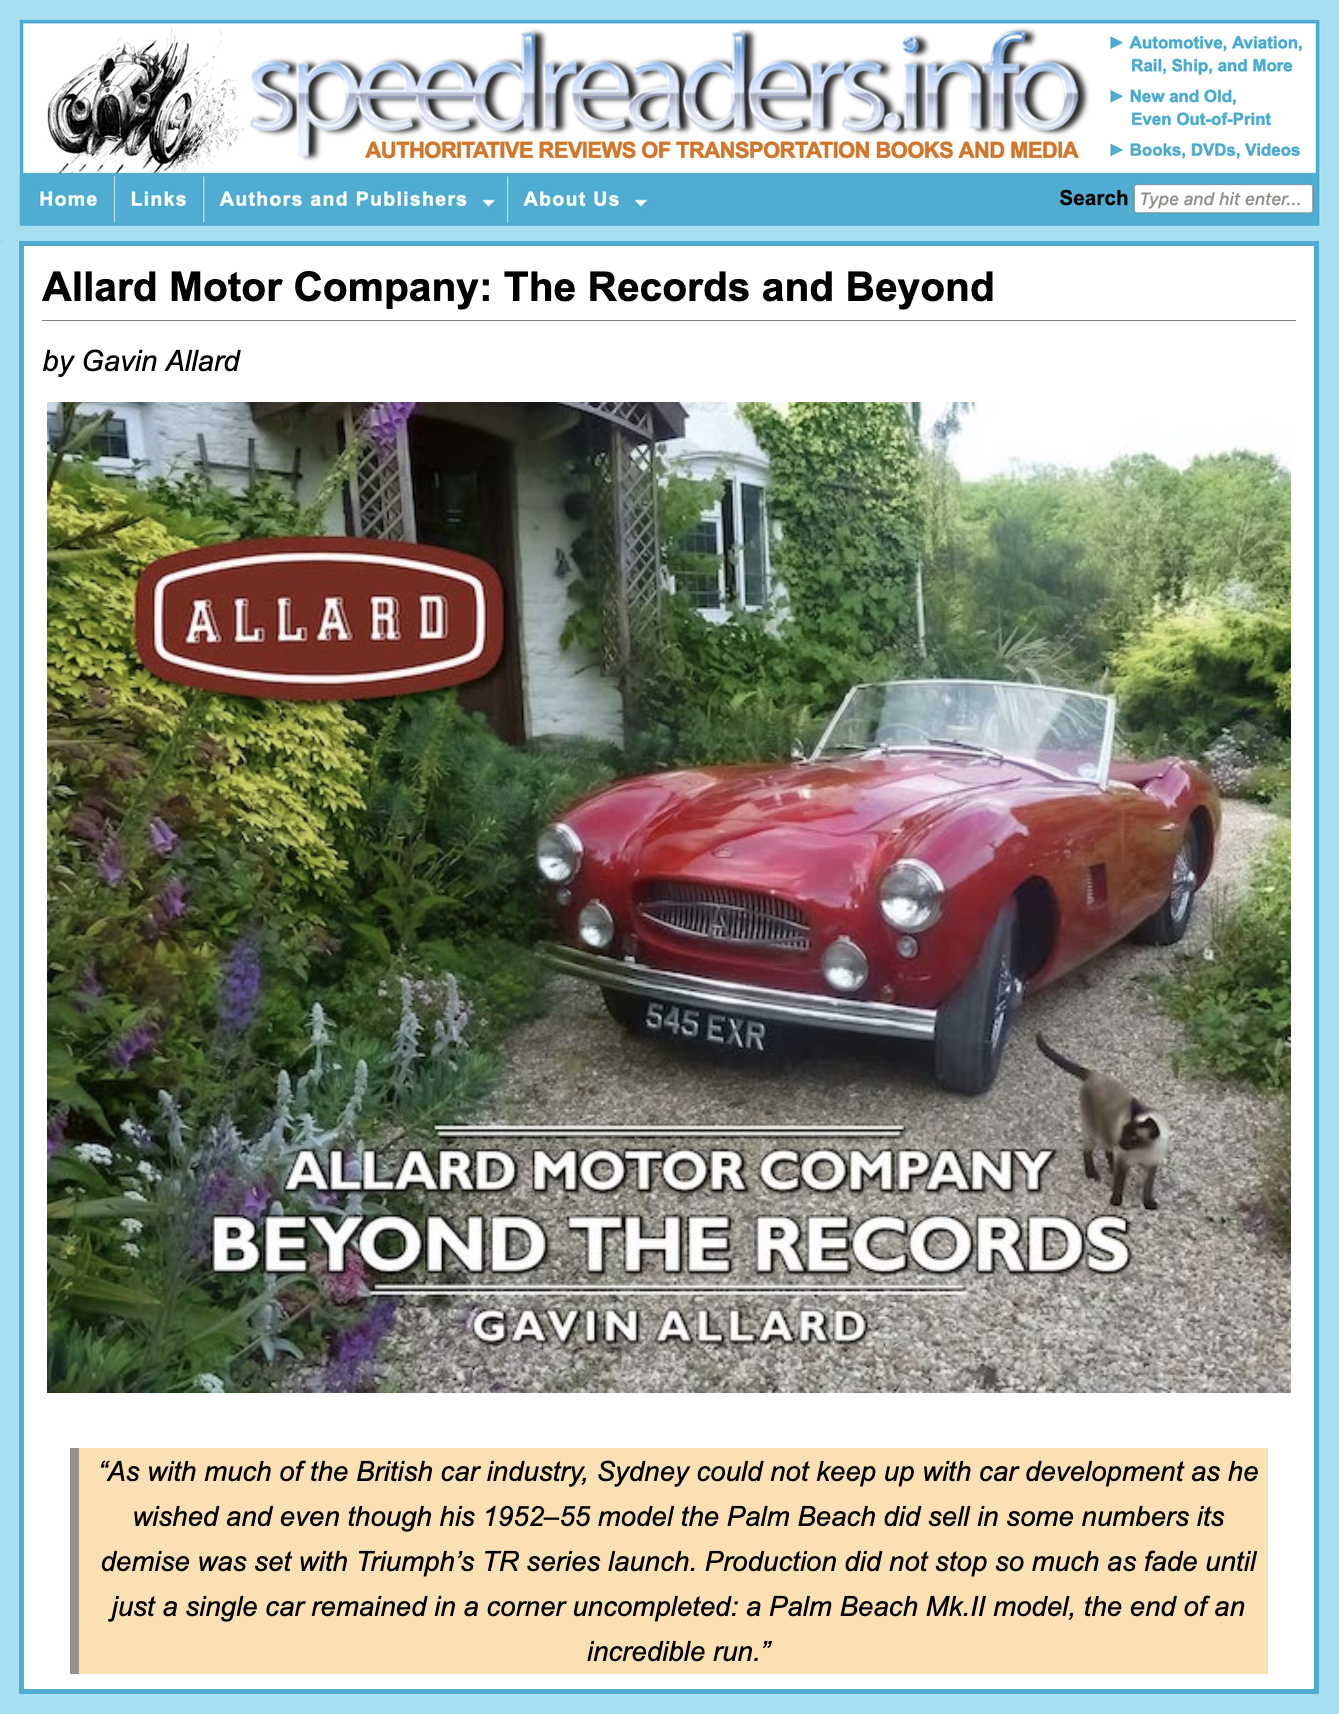 Allard Motor Company Beyond the Records